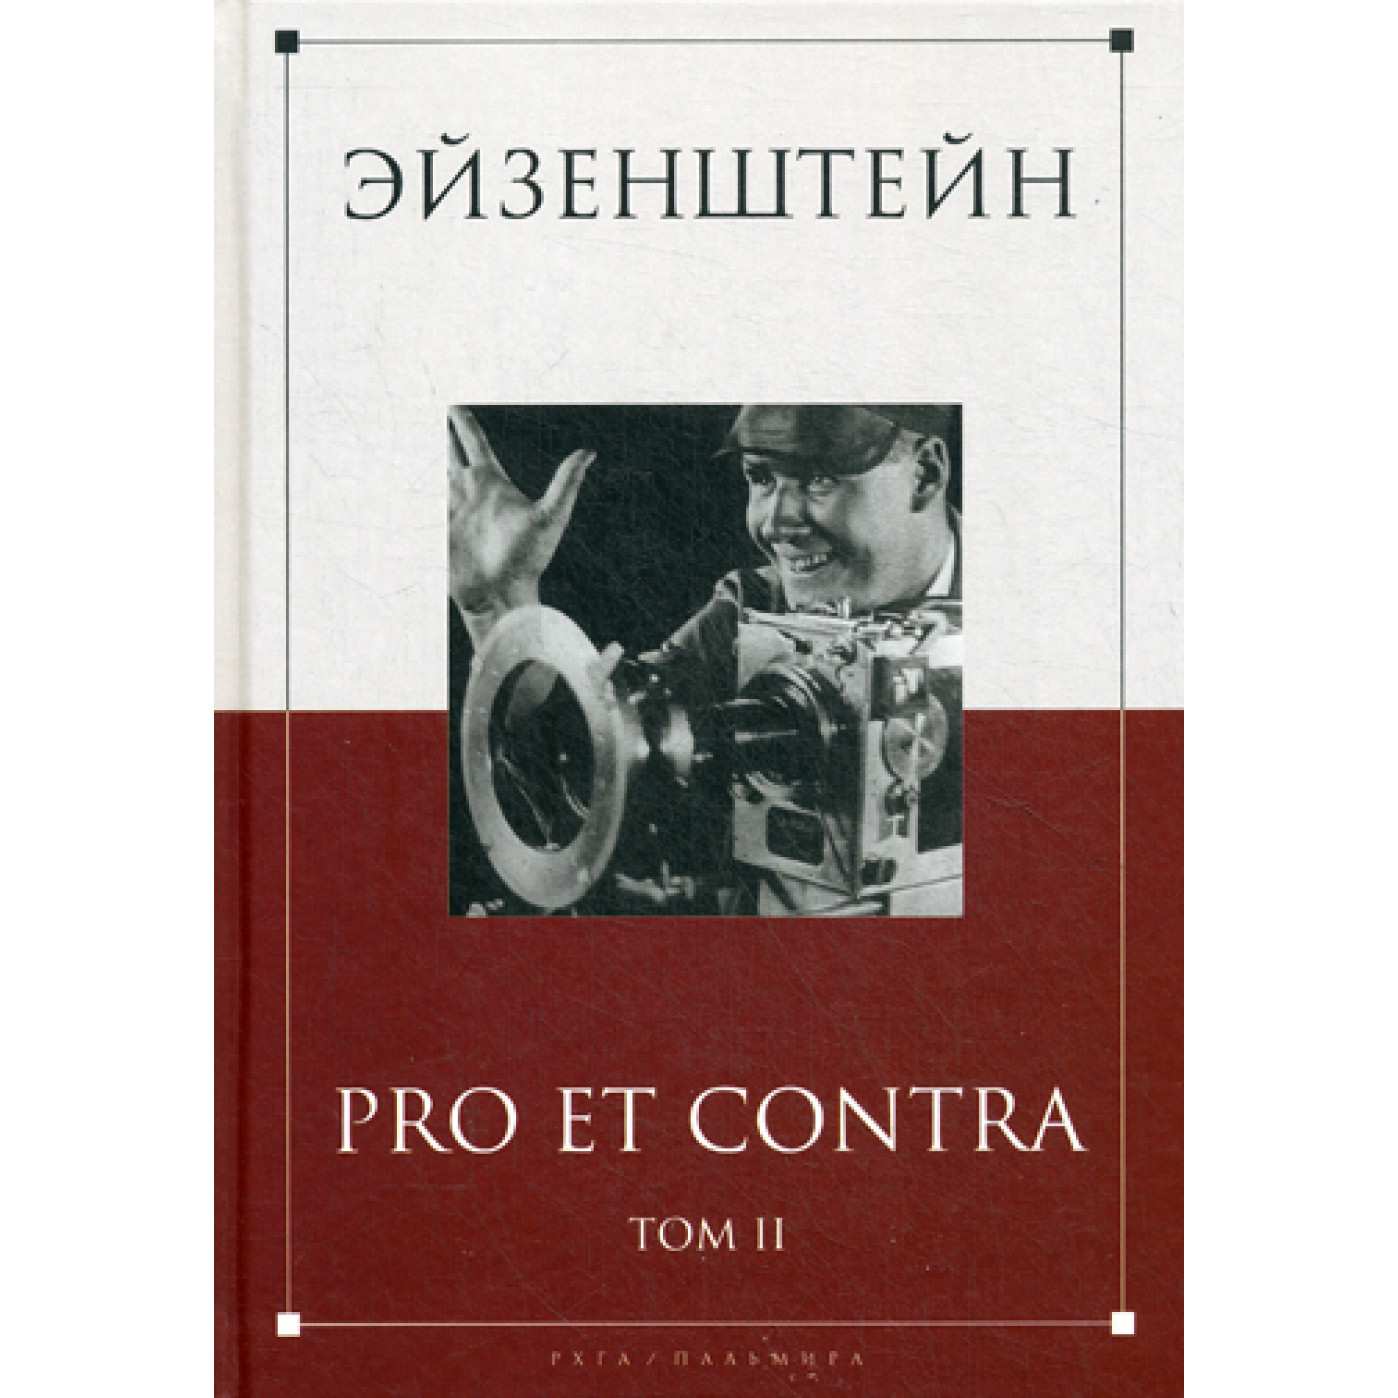 Эйзенштейн: pro et contra: антология. В 2 т. Т. 2. Сост. Скороход Н.С. и др.